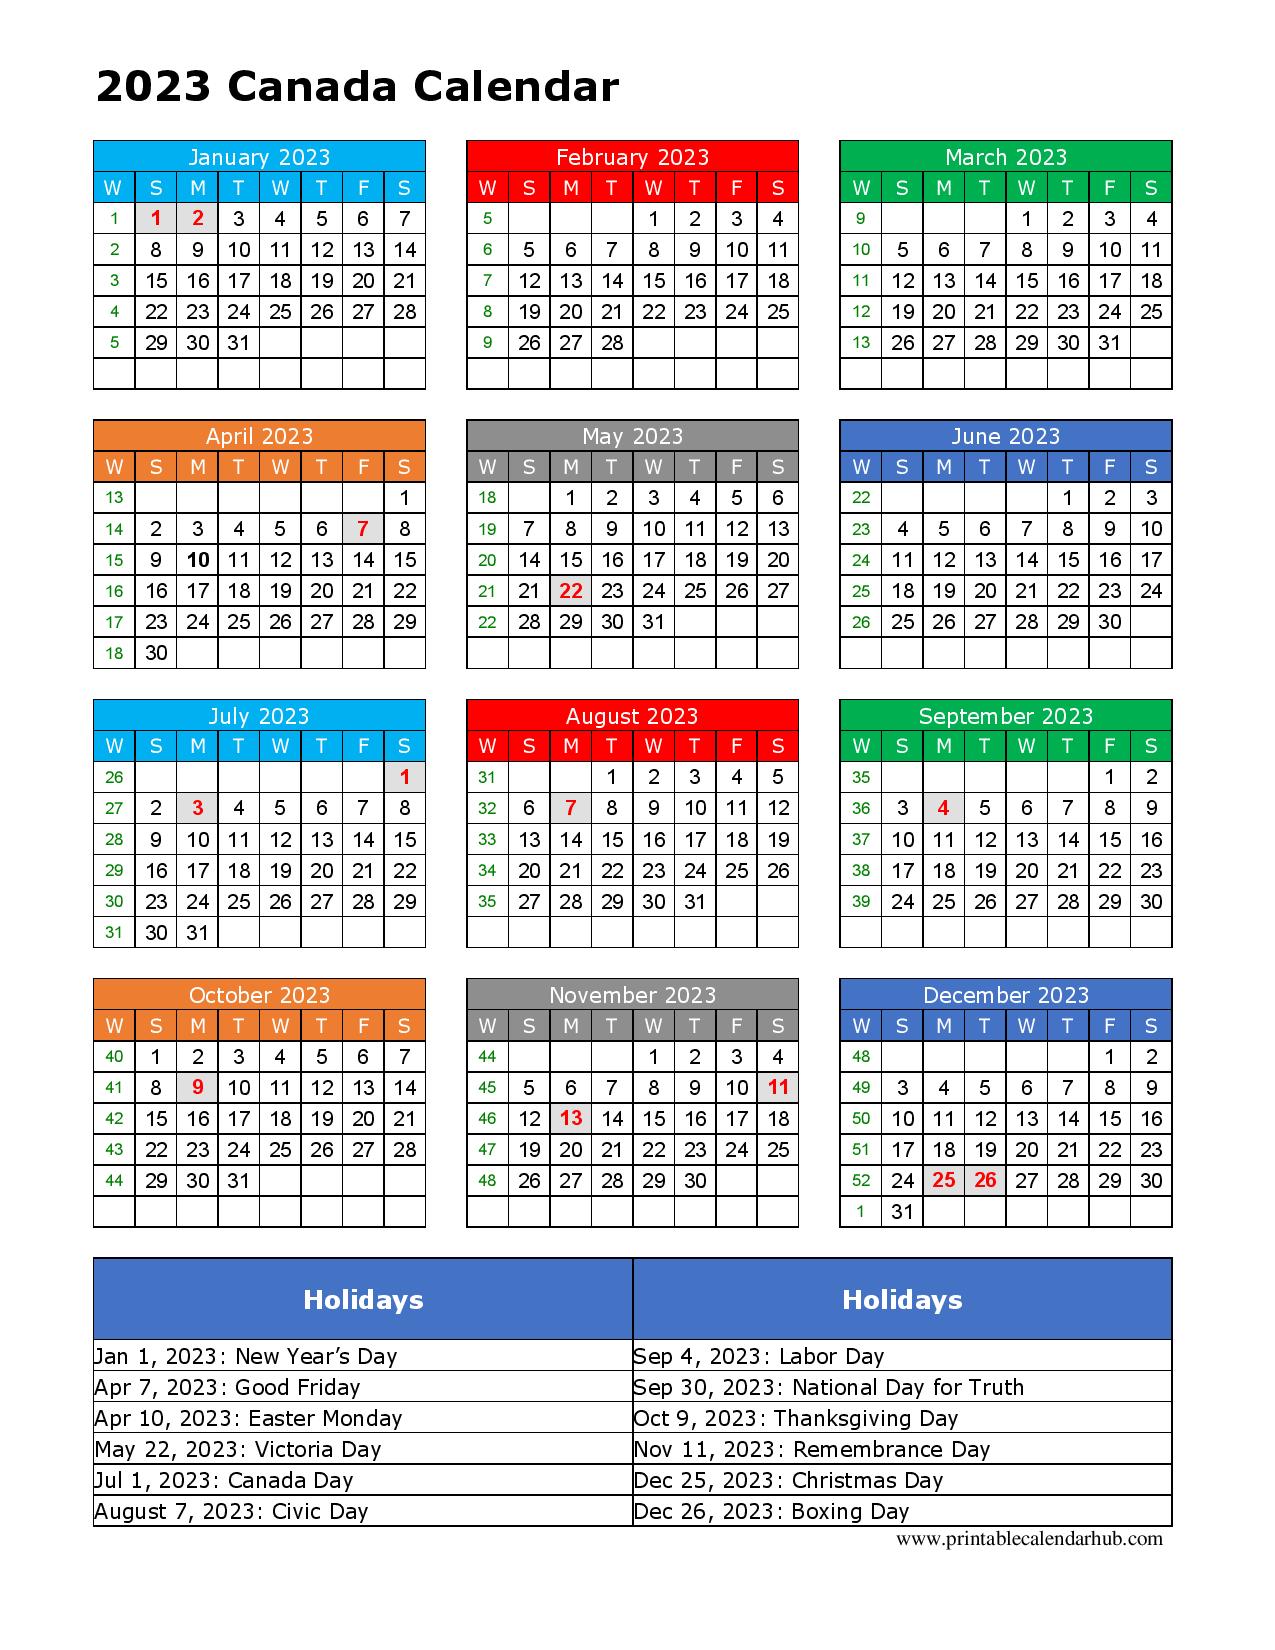 2023 Canada calendar with holidays